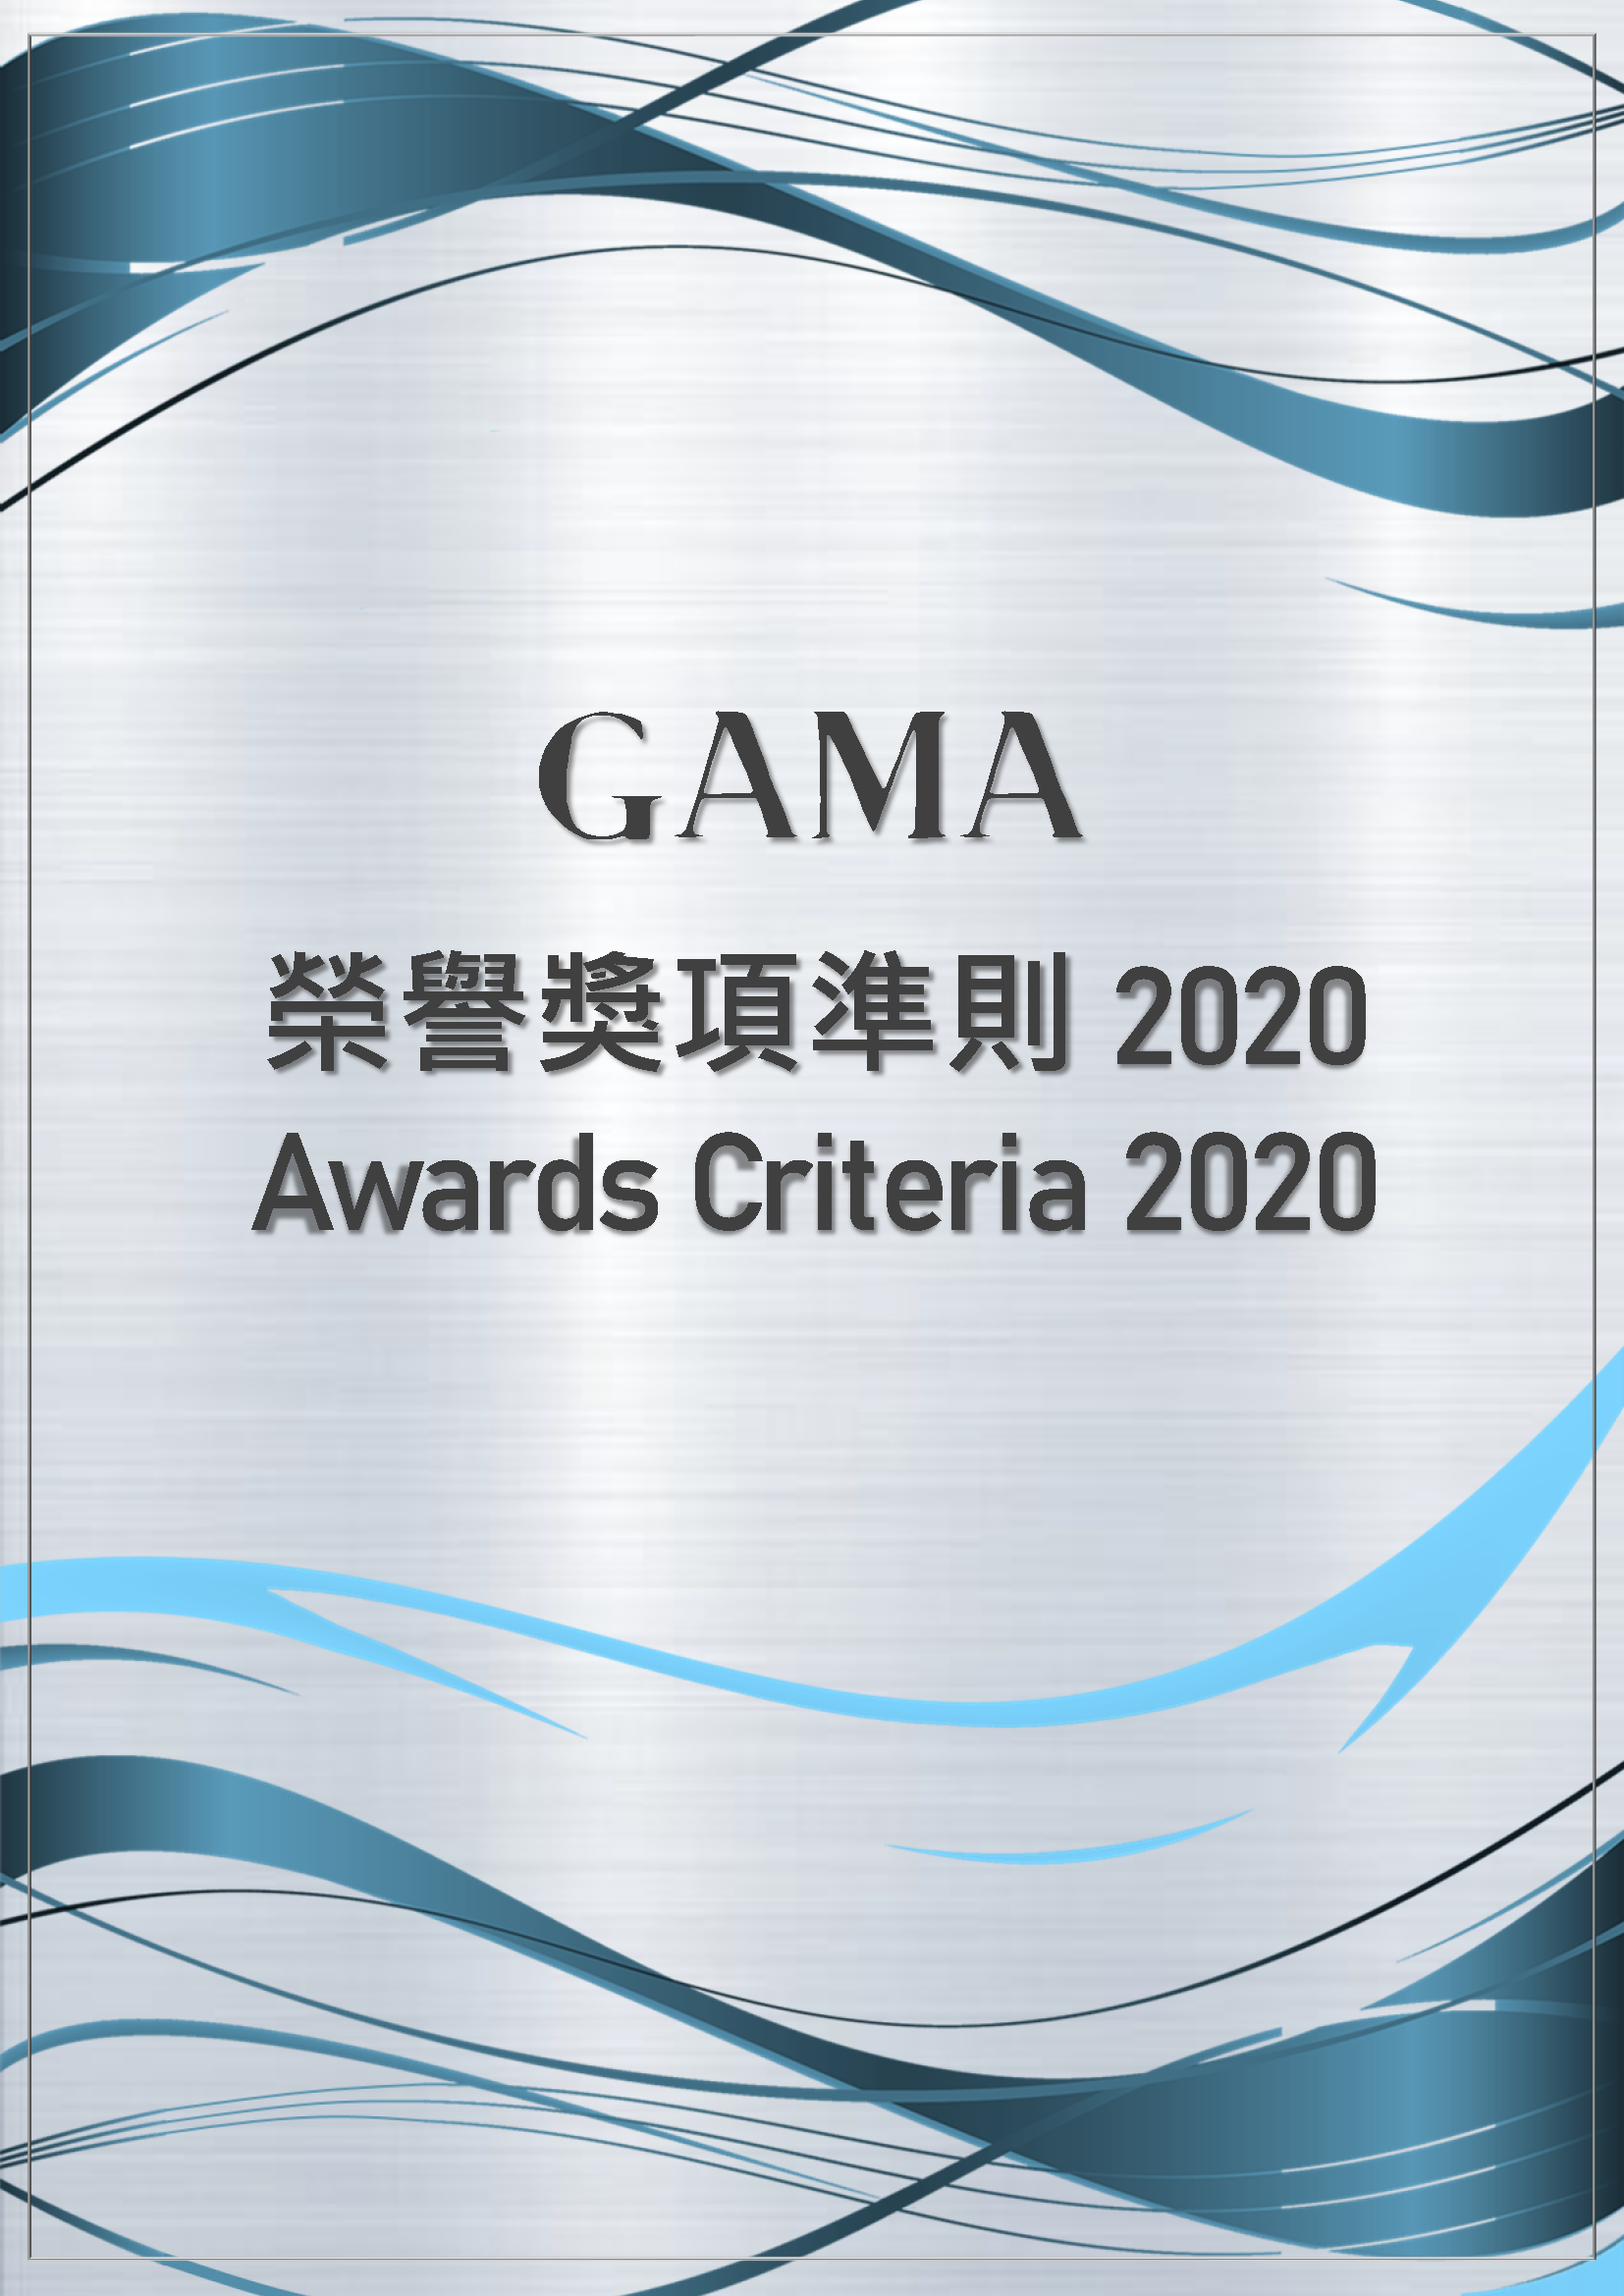 Awards Criteria Cover